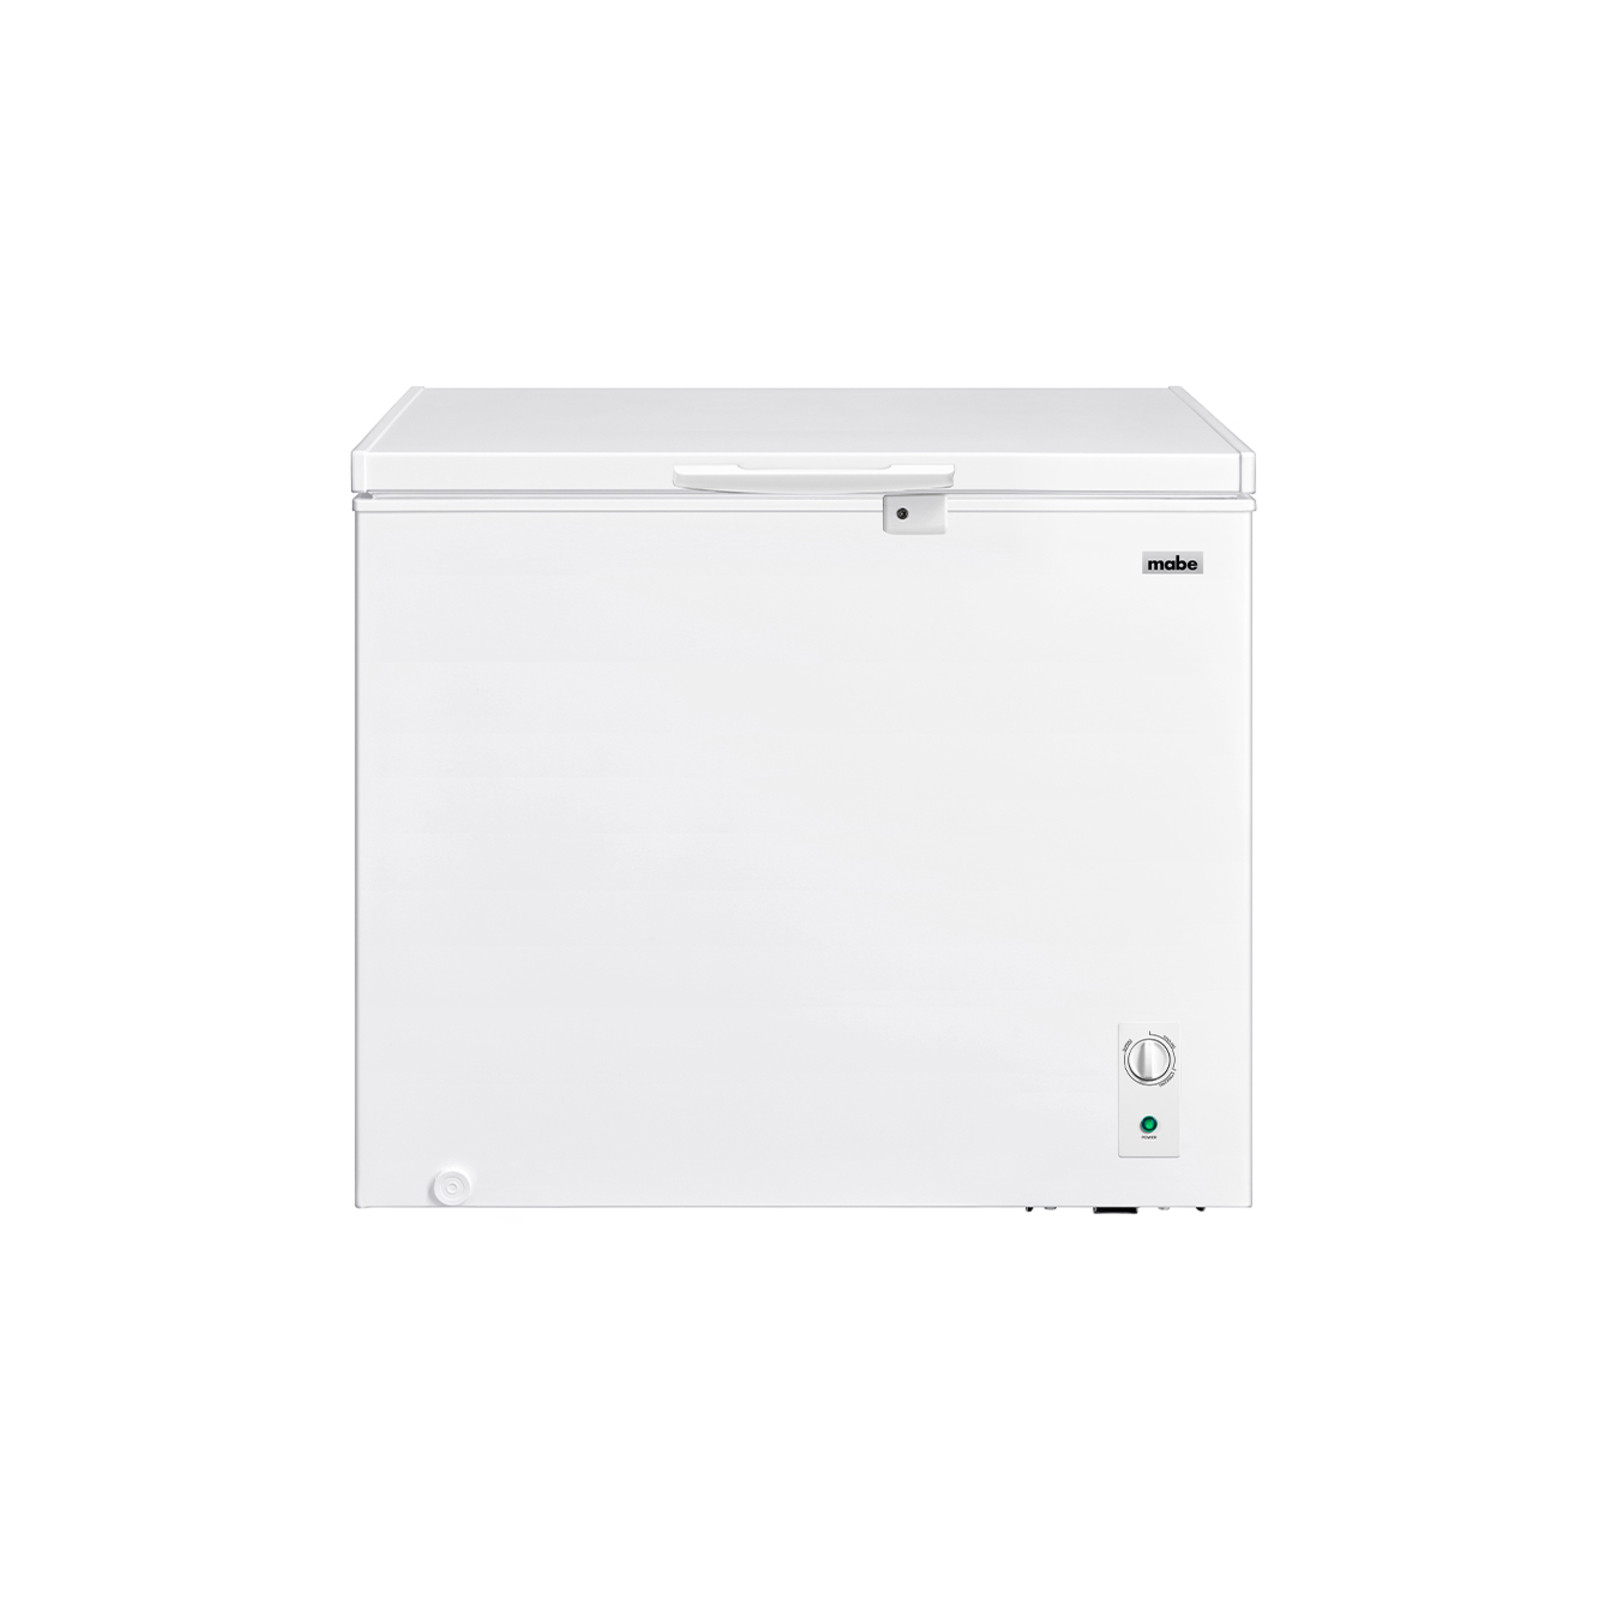  De 60 A 64 Cm - Congeladores Horizontales / Congeladores:  Grandes Electrodomésticos